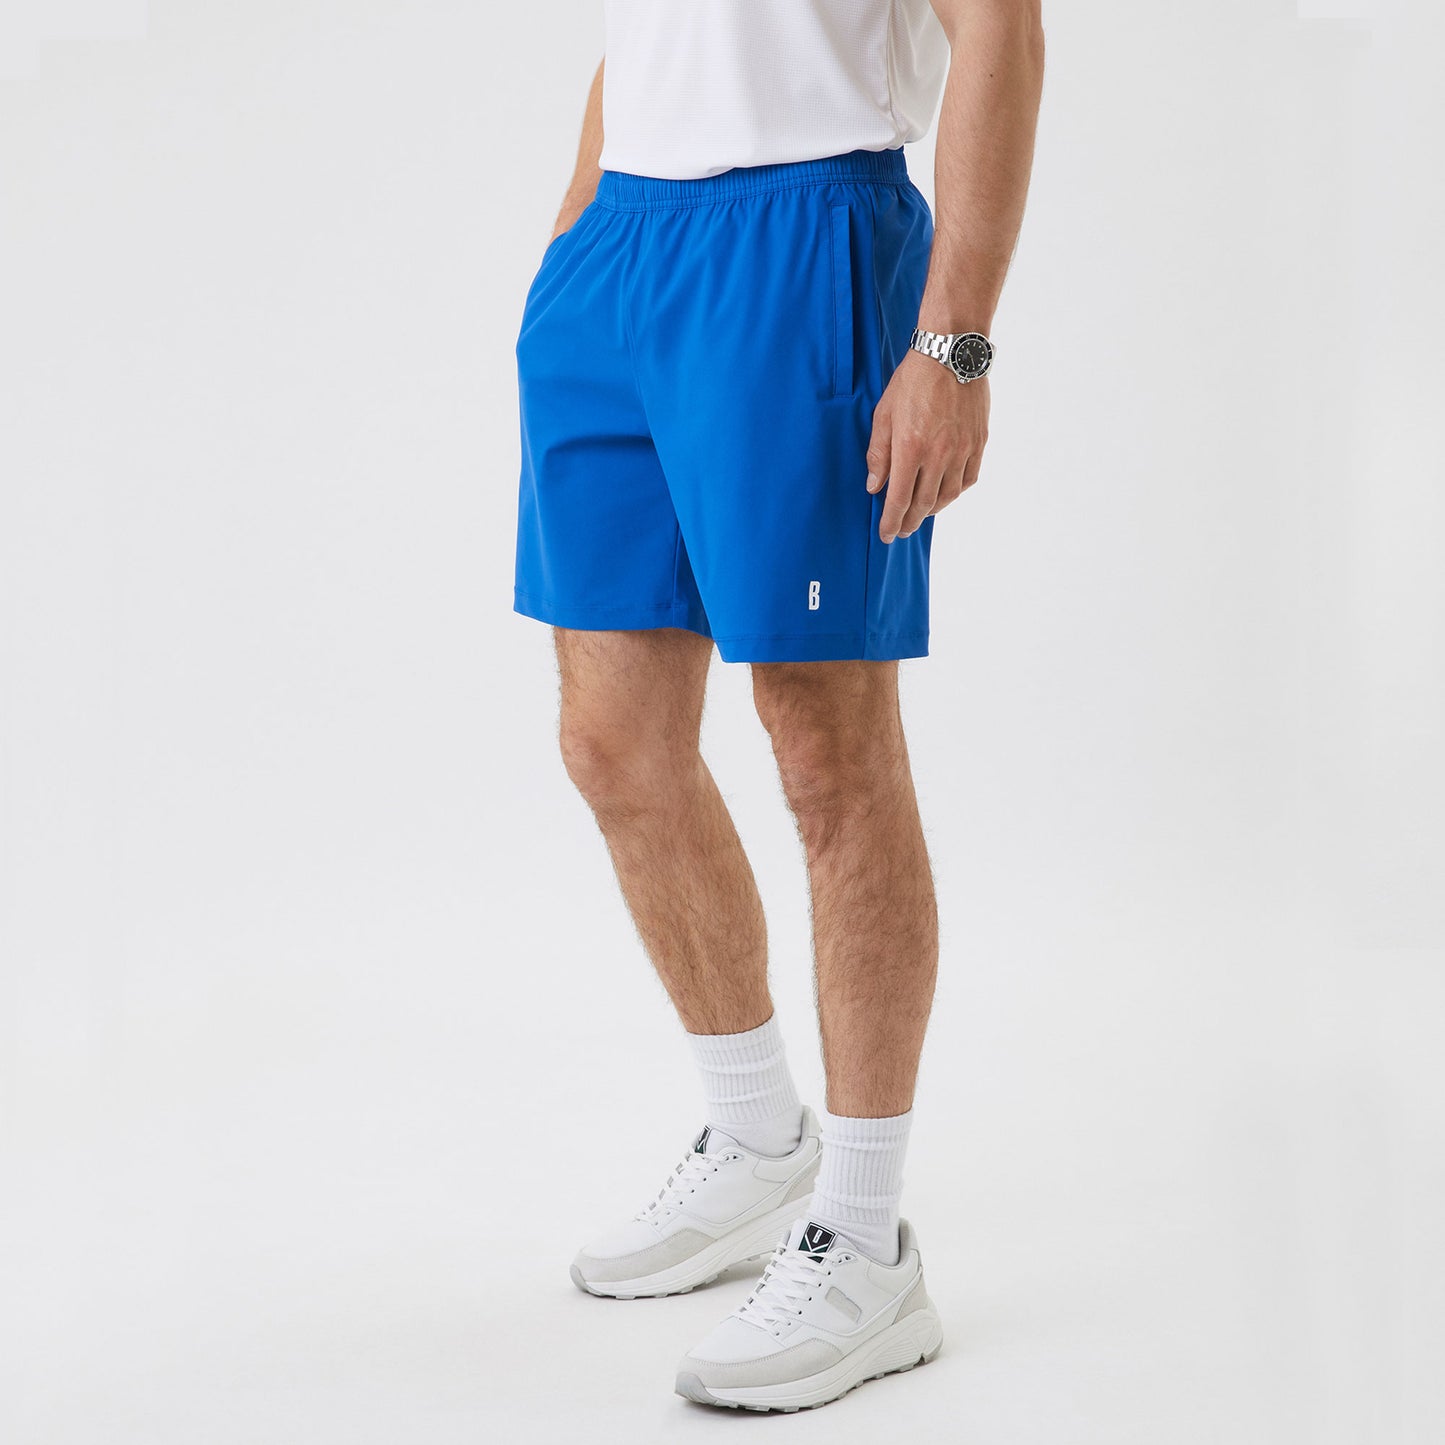 Björn Borg Ace Men's 9-Inch Tennis Shorts Blue (1)